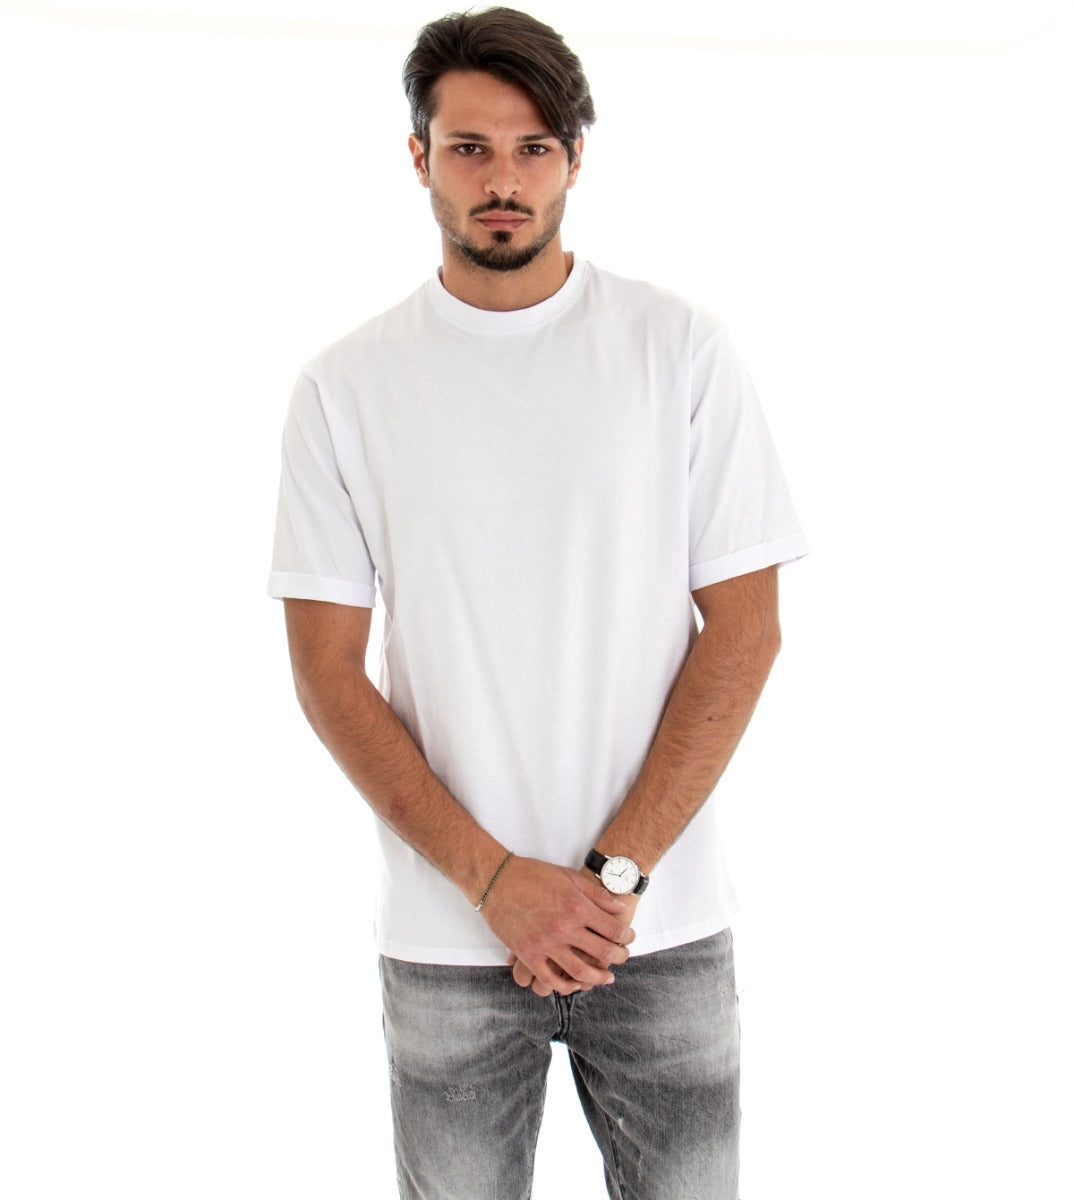 Men's T-shirt Short Sleeve Solid Color White Retro Print Cotton GIOSAL